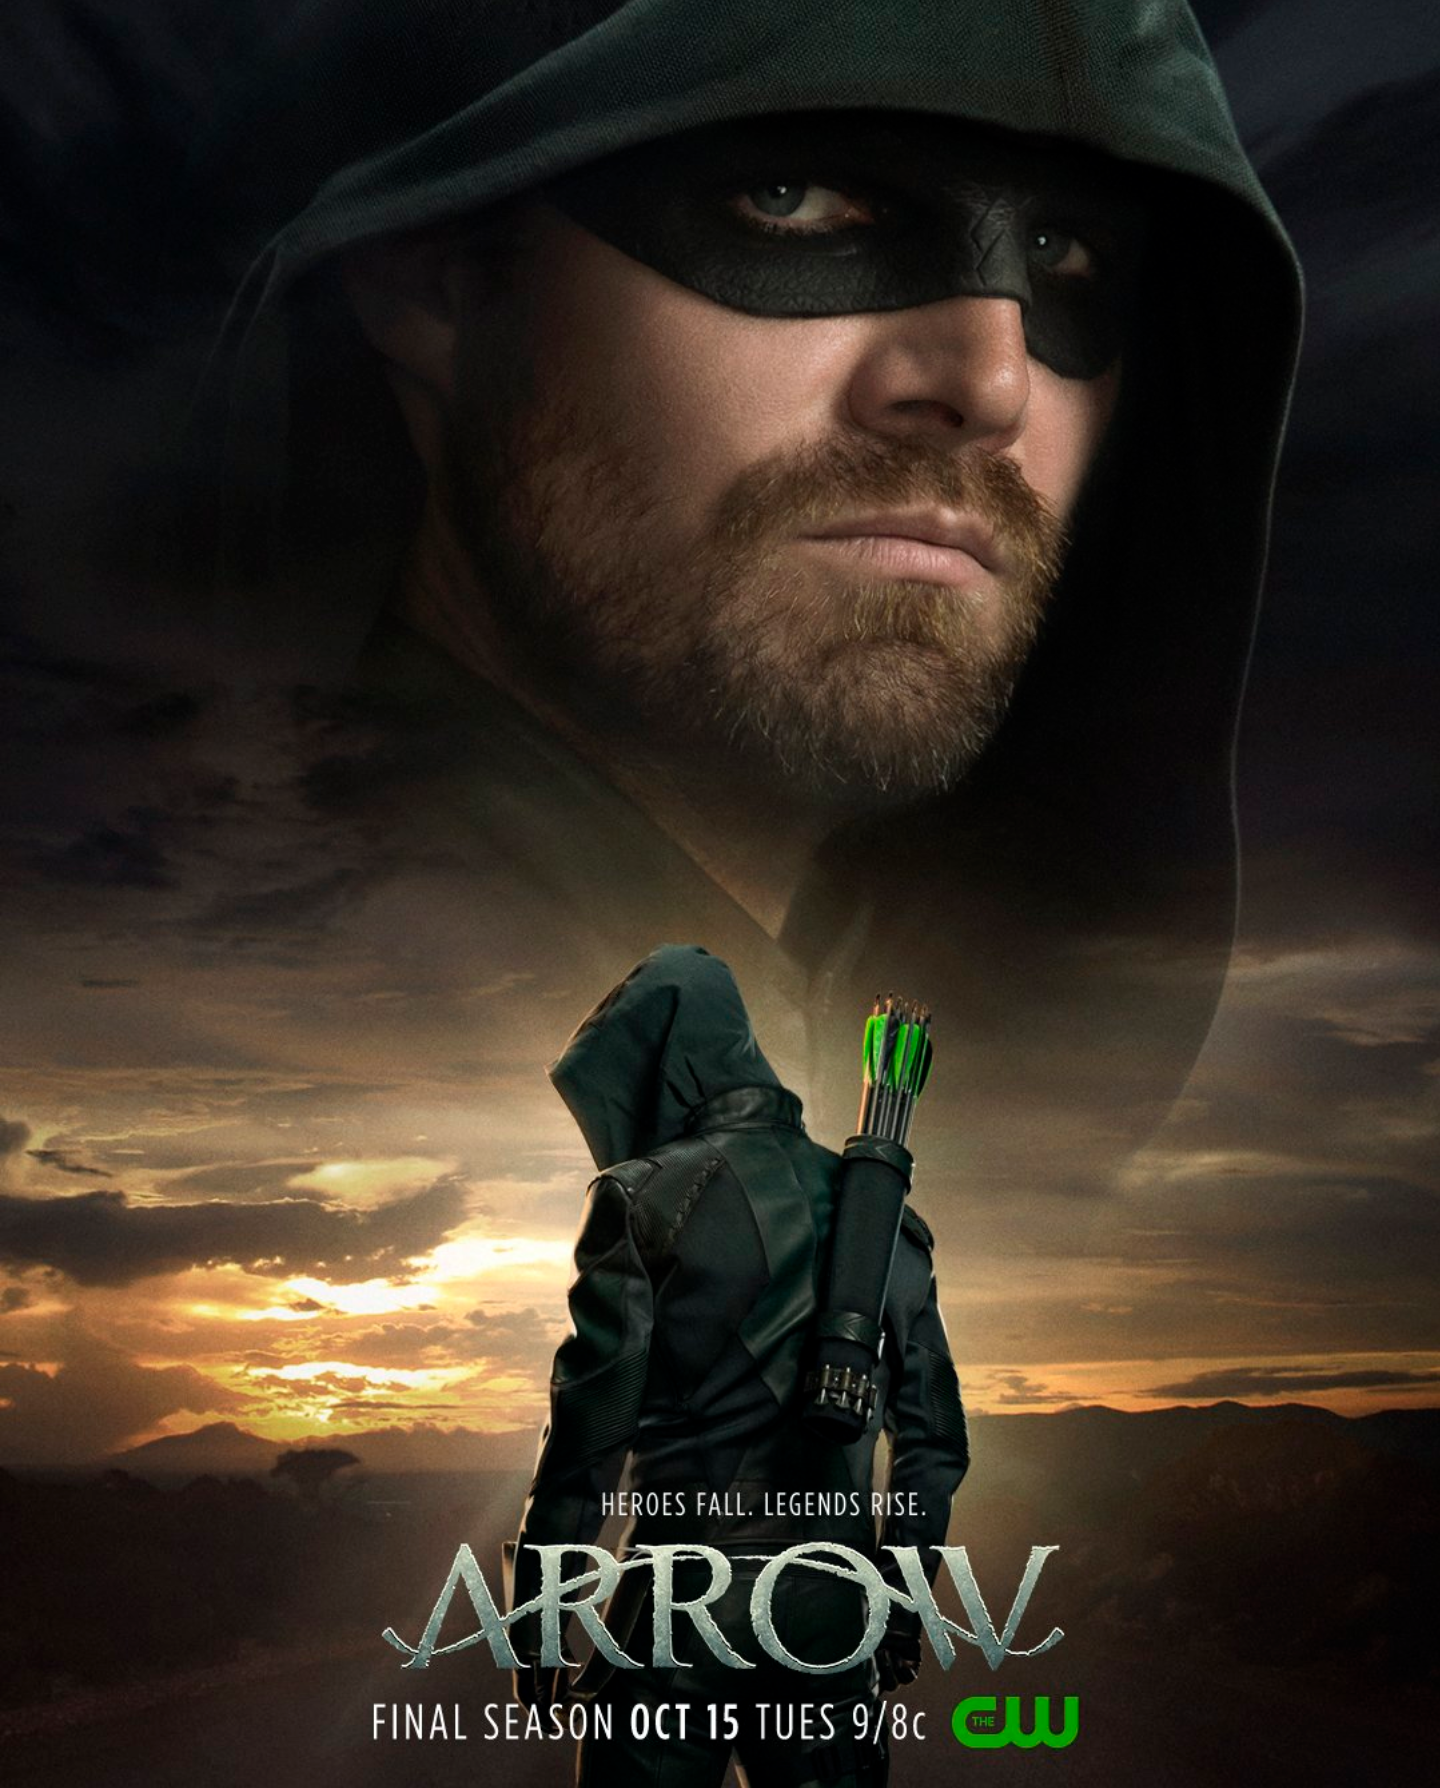 Arrow (season 2) - Wikipedia